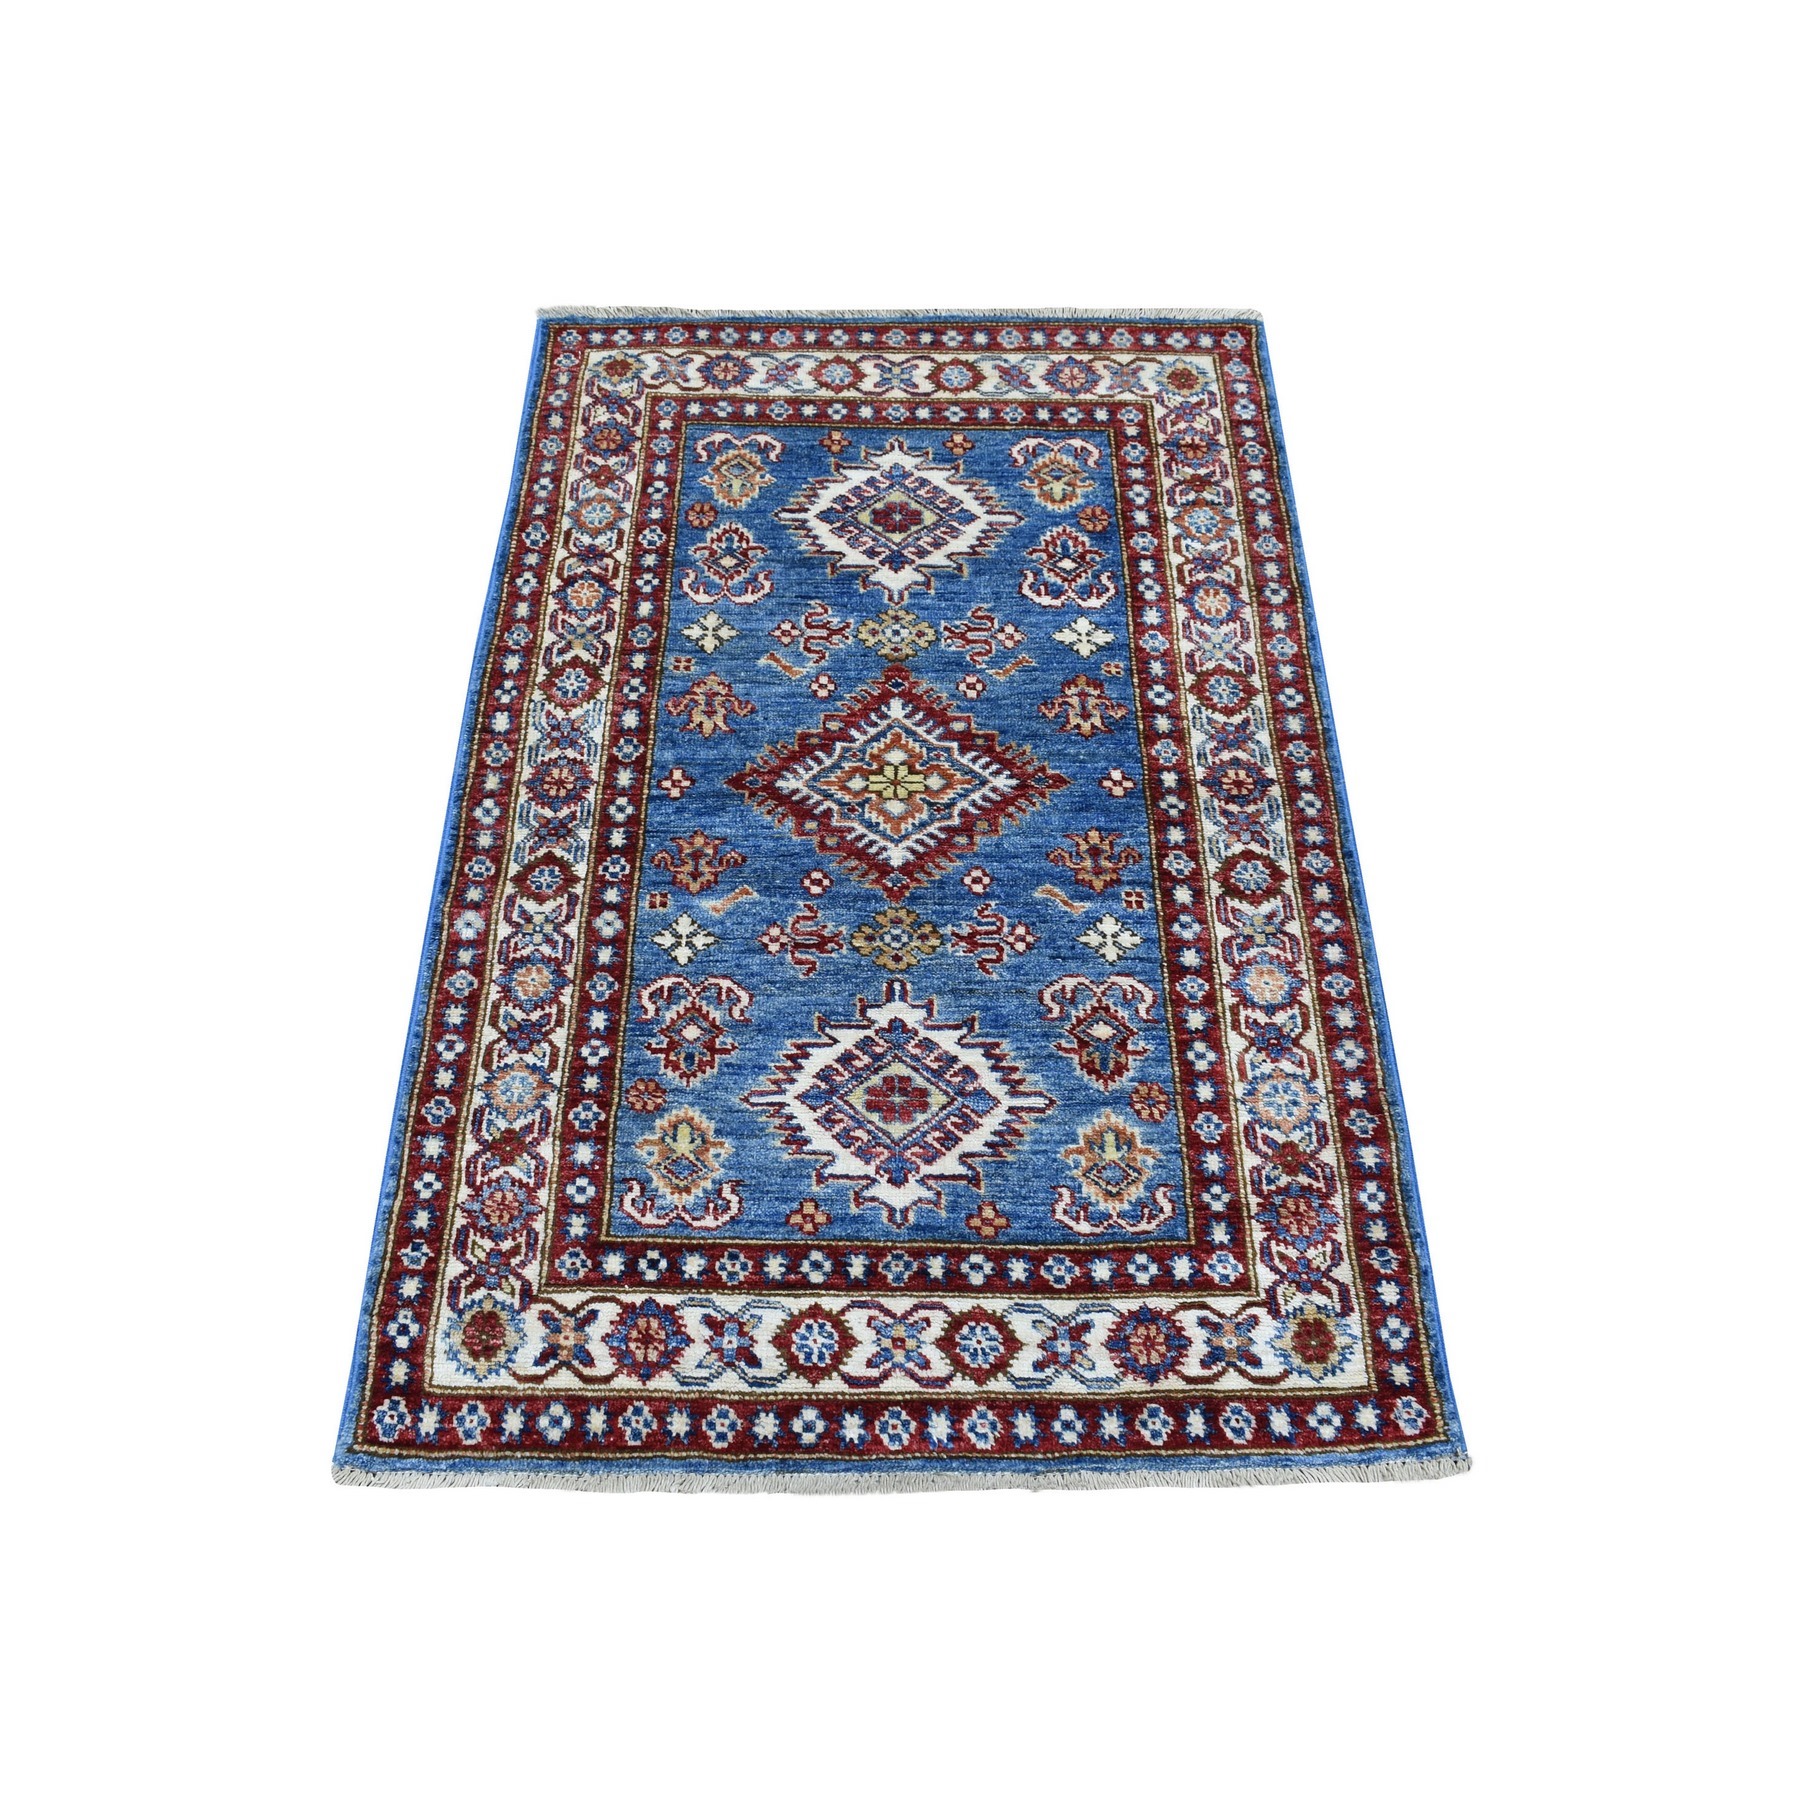 2'7"x4'1" Light Blue Super Kazak with Triple Medallions Design Soft Afghan Wool Hand Woven Oriental Rug 